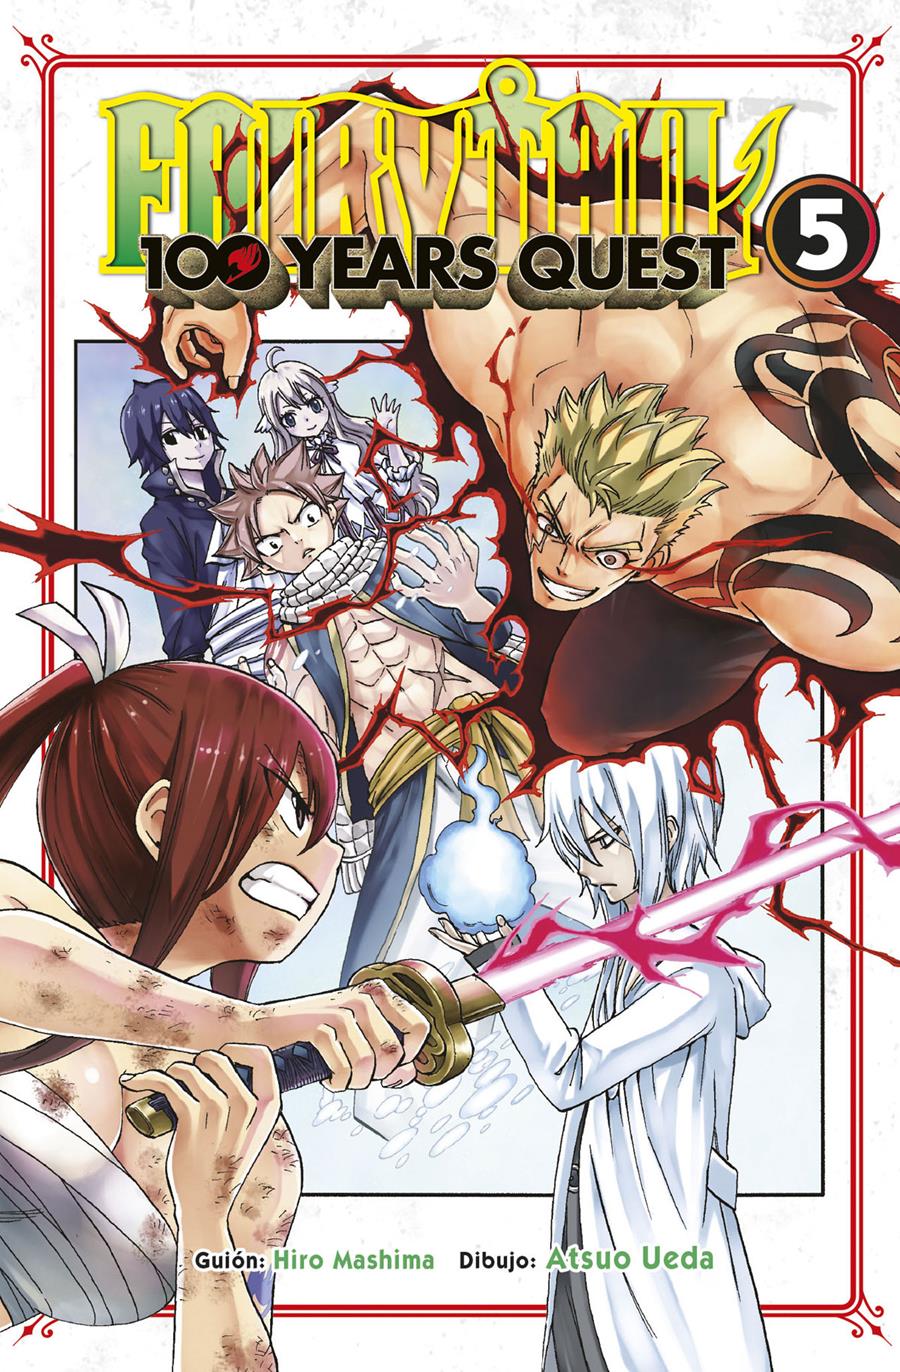 Fairy Tail 100 years Quest 05 | N0521-NOR26 | Hiro Mashima, Asuo Ueda | Terra de Còmic - Tu tienda de cómics online especializada en cómics, manga y merchandising